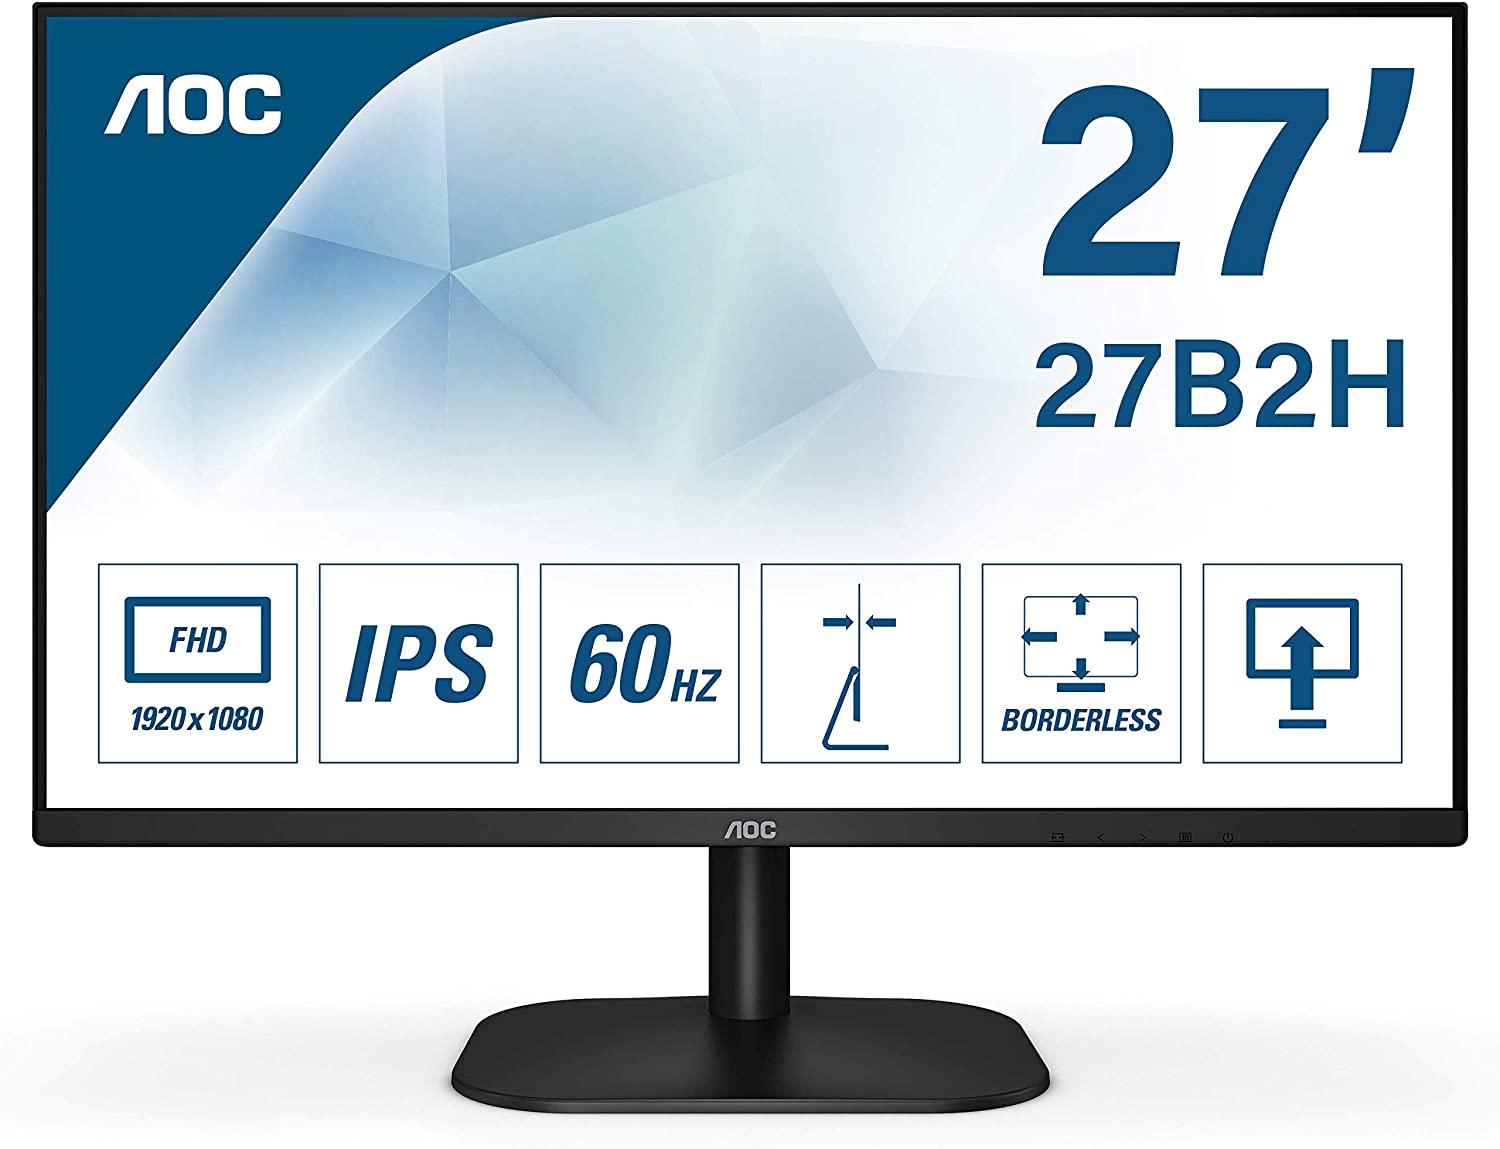 AOC 27B2H/IPS/FHD(1920x1080)/16:9/ 250cd/m2/75Hz/HDMI1.4/VGA/Headphone out (3.5mm) monitors